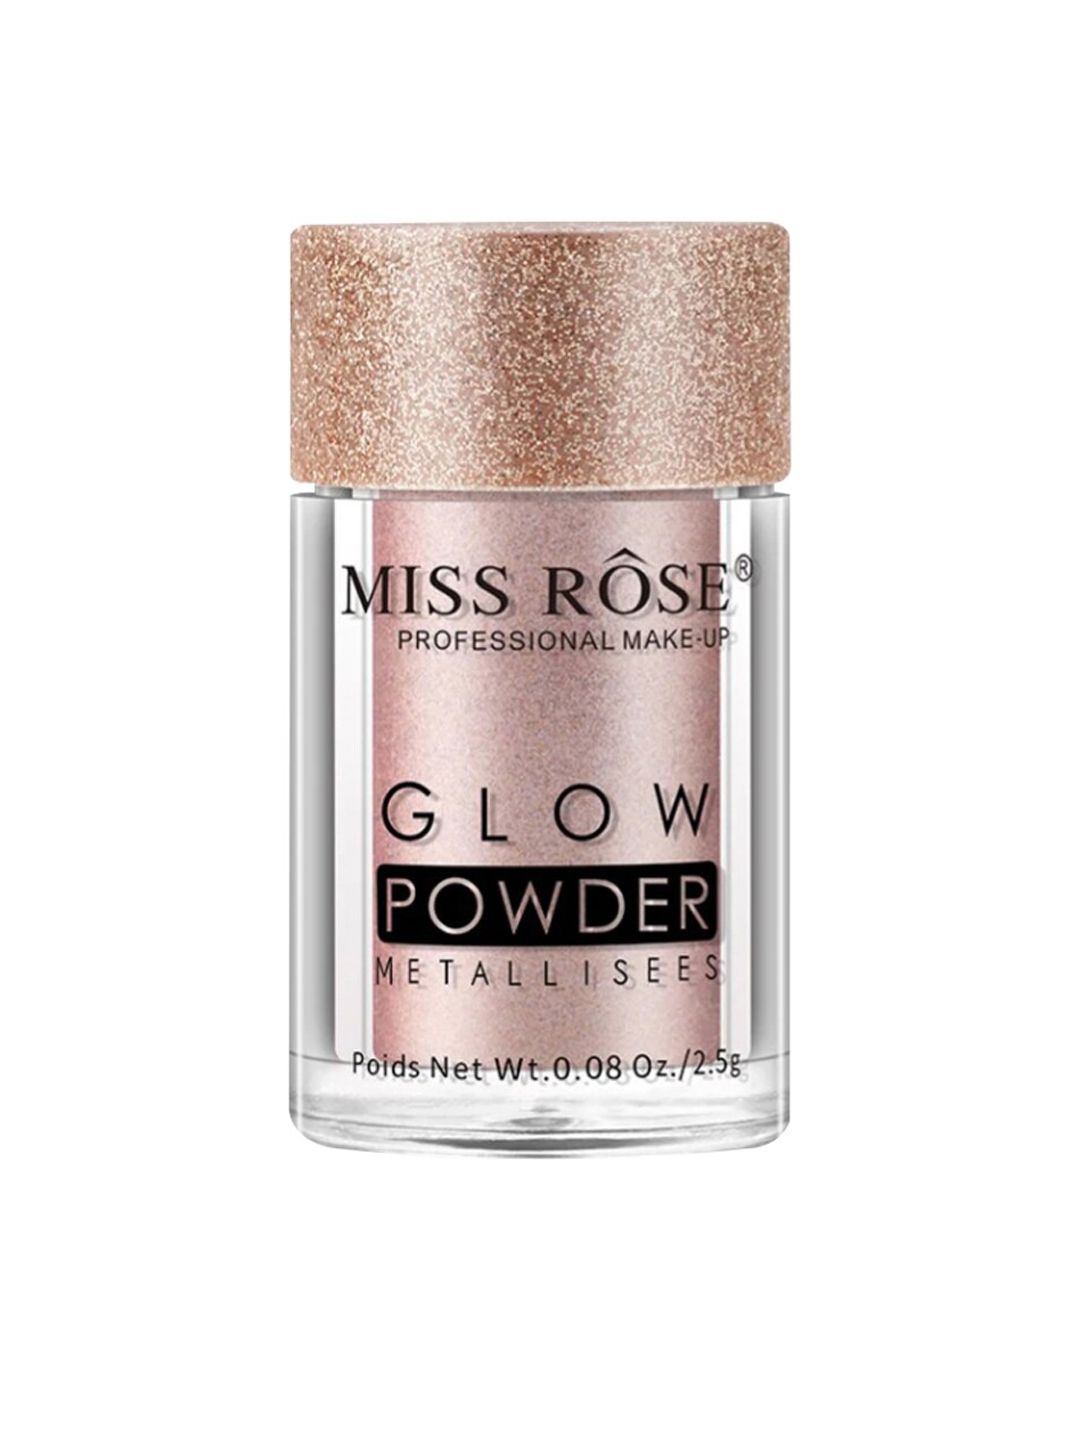 MISS ROSE Single Eyeshadow Glow Powder -Metalises 7001-010M 09 Price in India